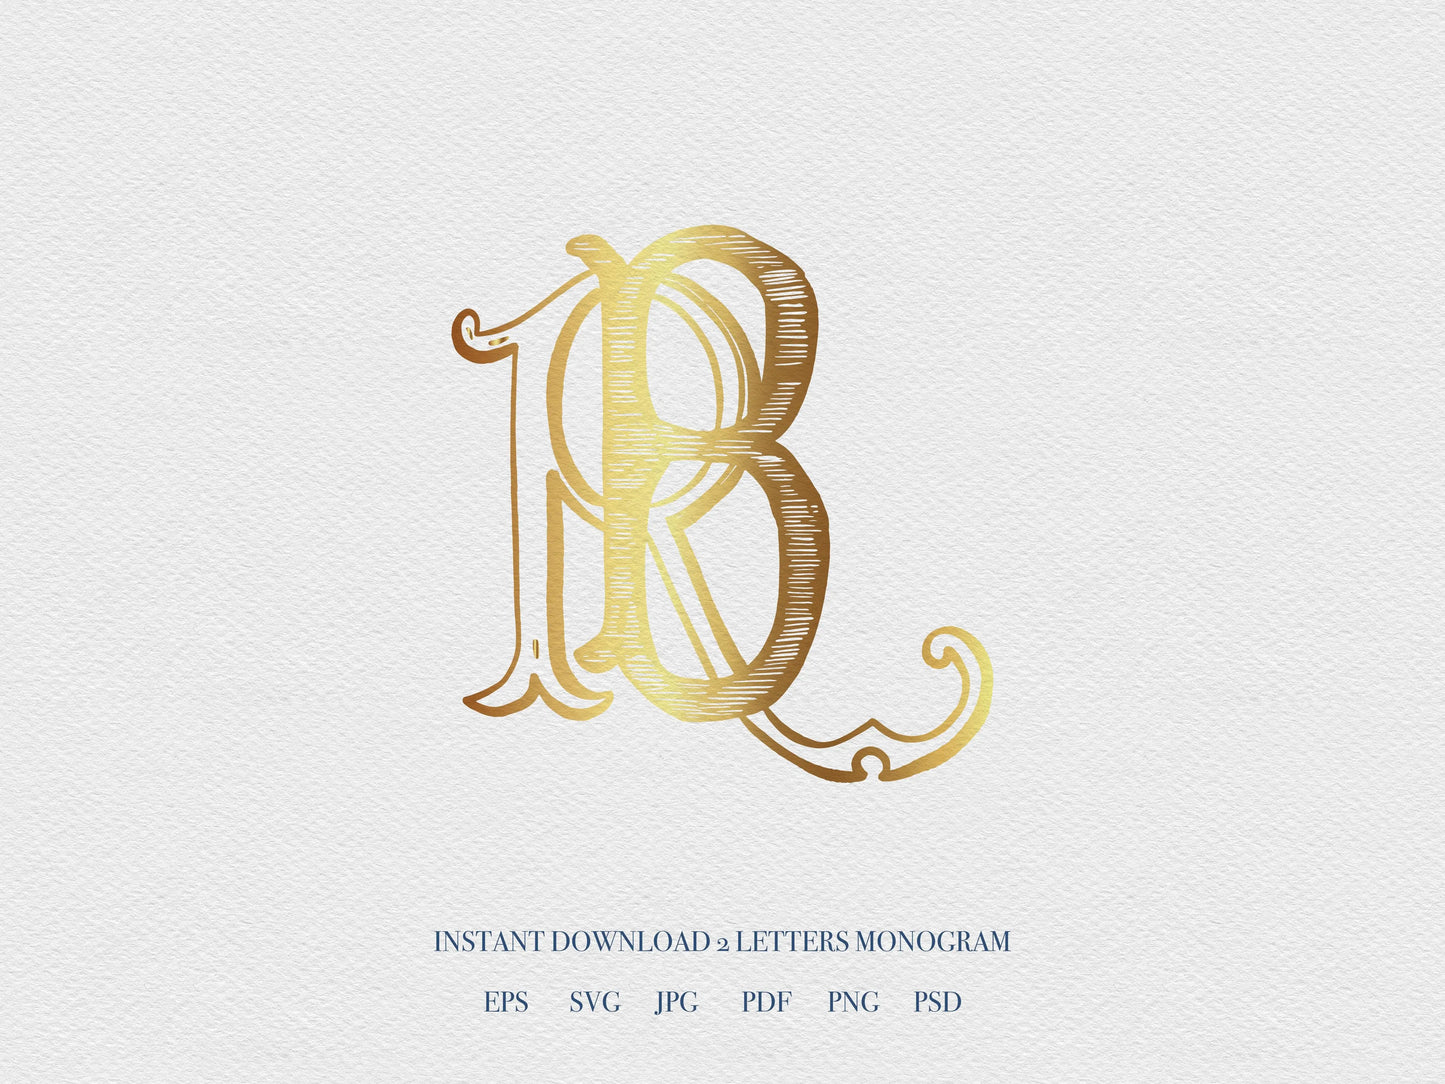 2 Letter Monogram with Letters BR | Digital Download - Wedding Monogram SVG, Personal Logo, Wedding Logo for Wedding Invitations The Wedding Crest Lab